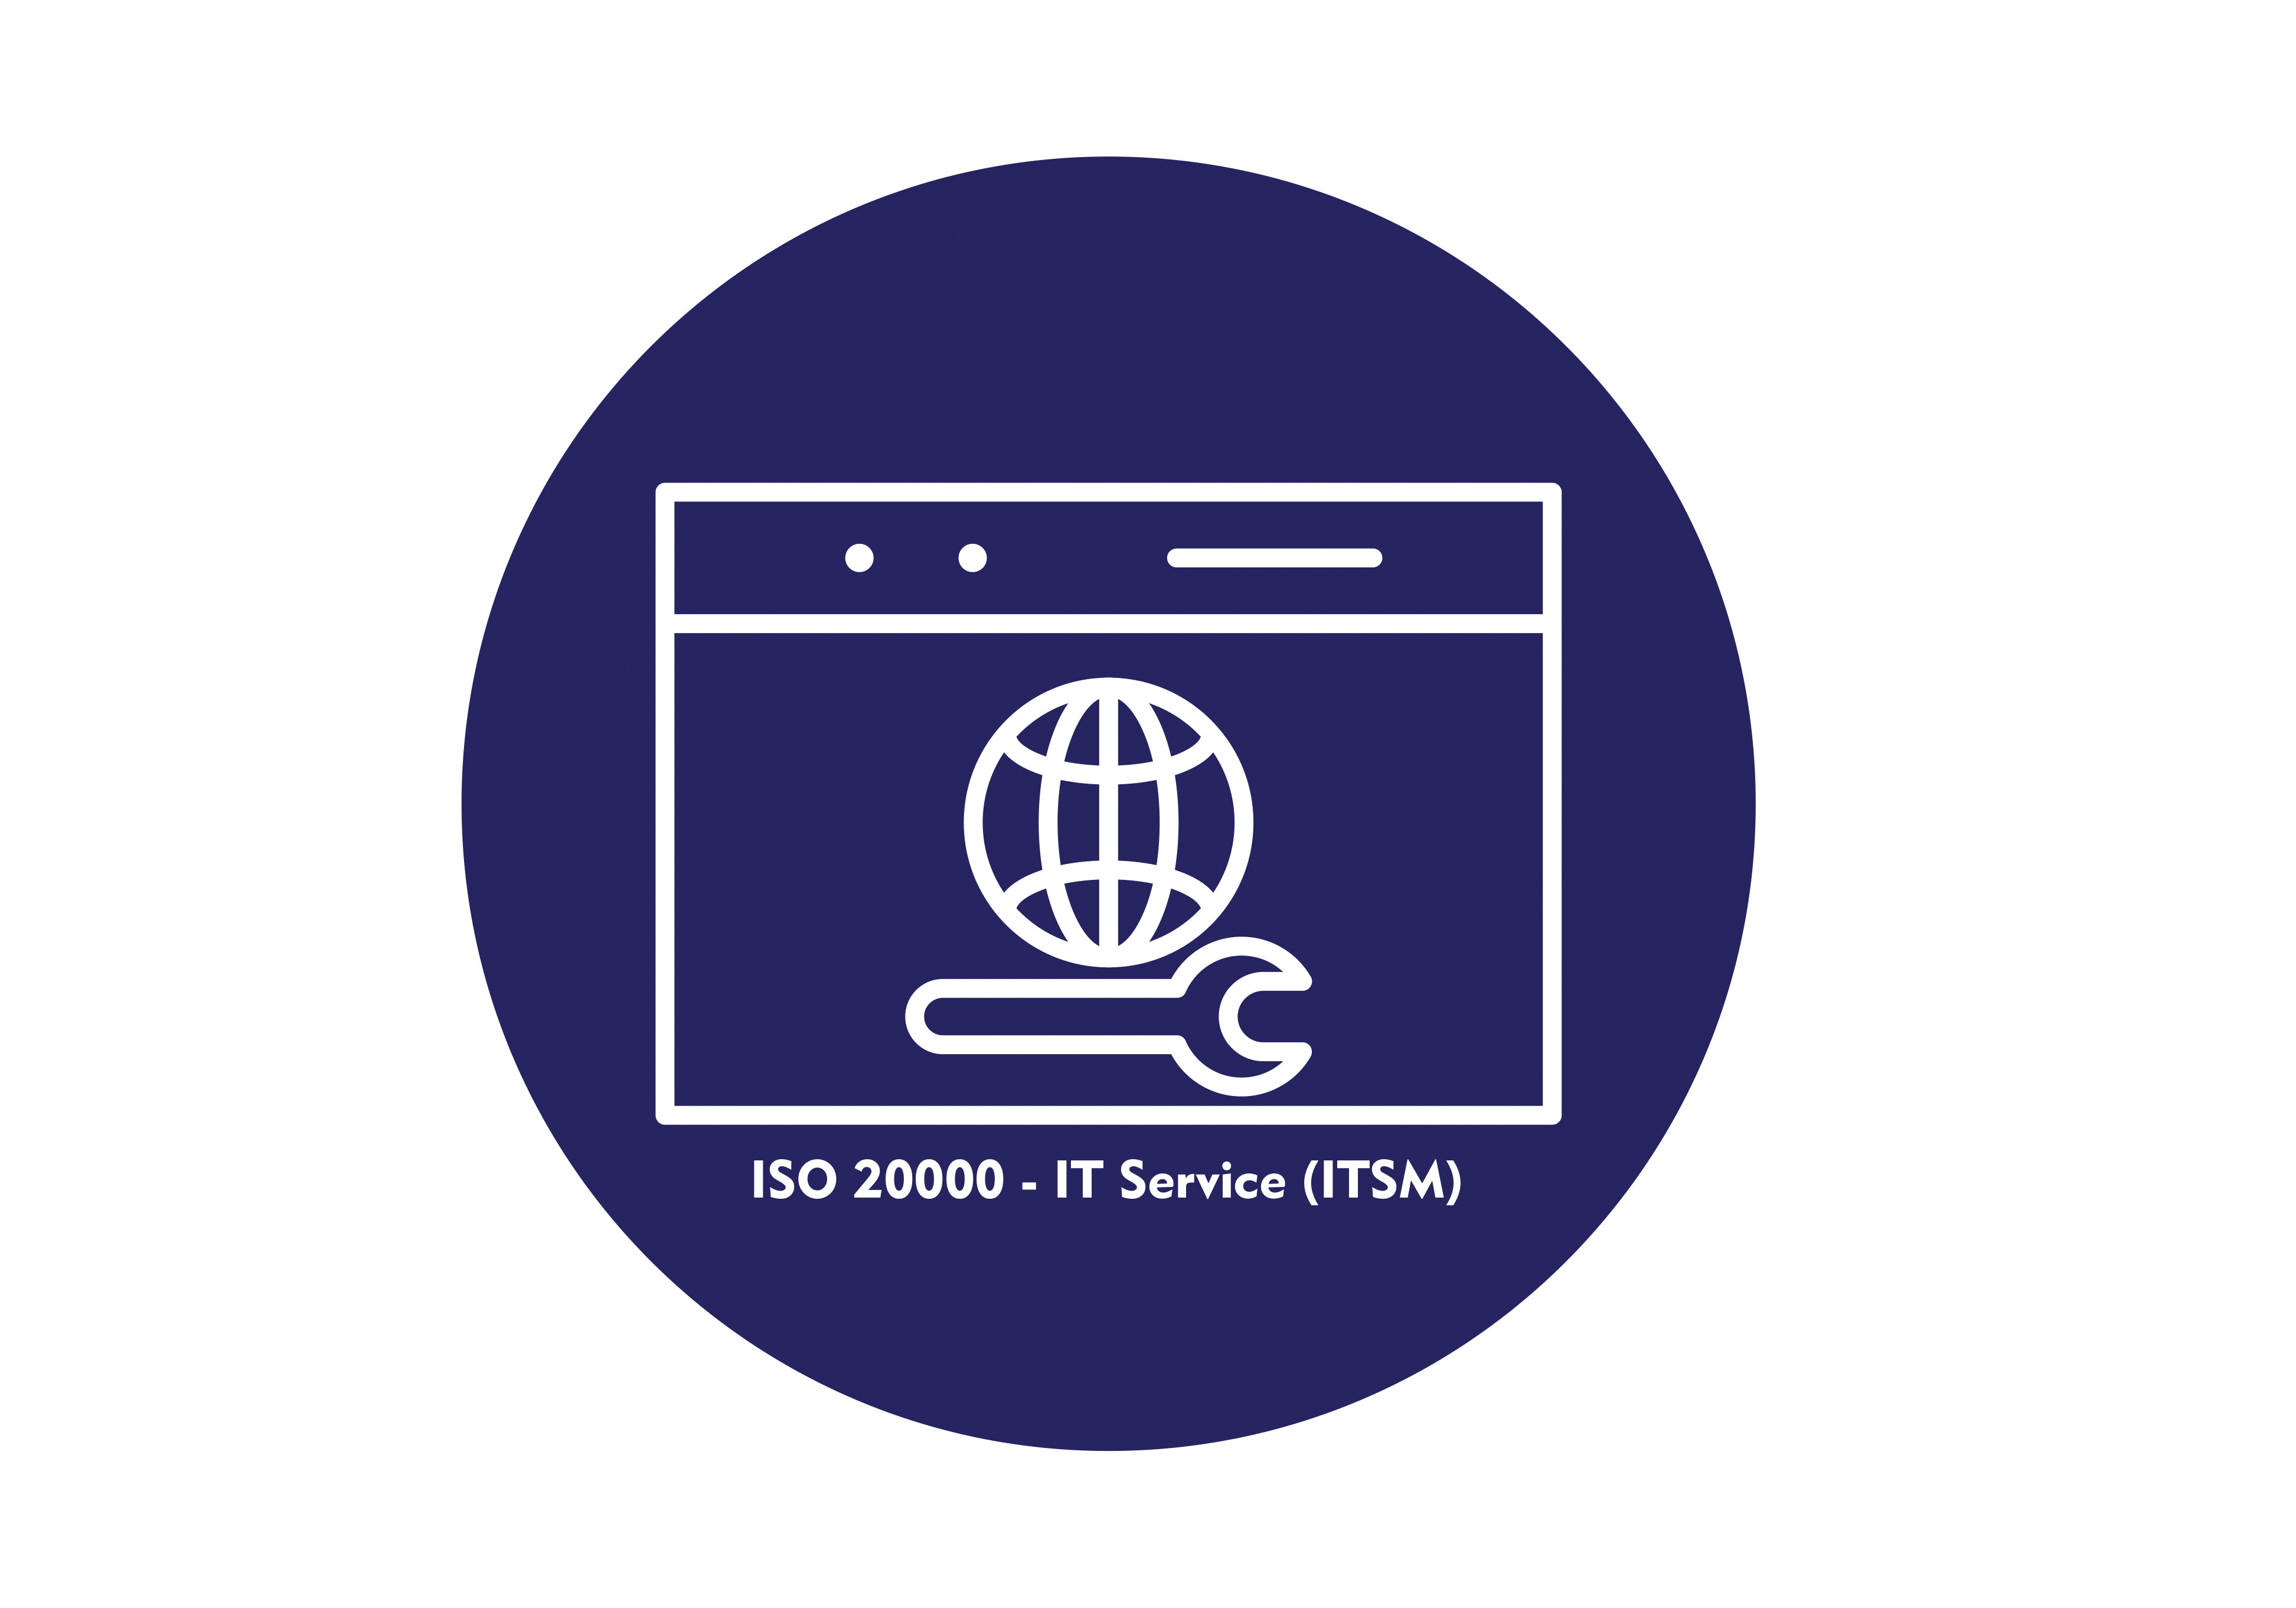 https://goaltechno.com/wp-content/uploads/2022/01/ISO-20000-IT-Service-ITSM-1.png